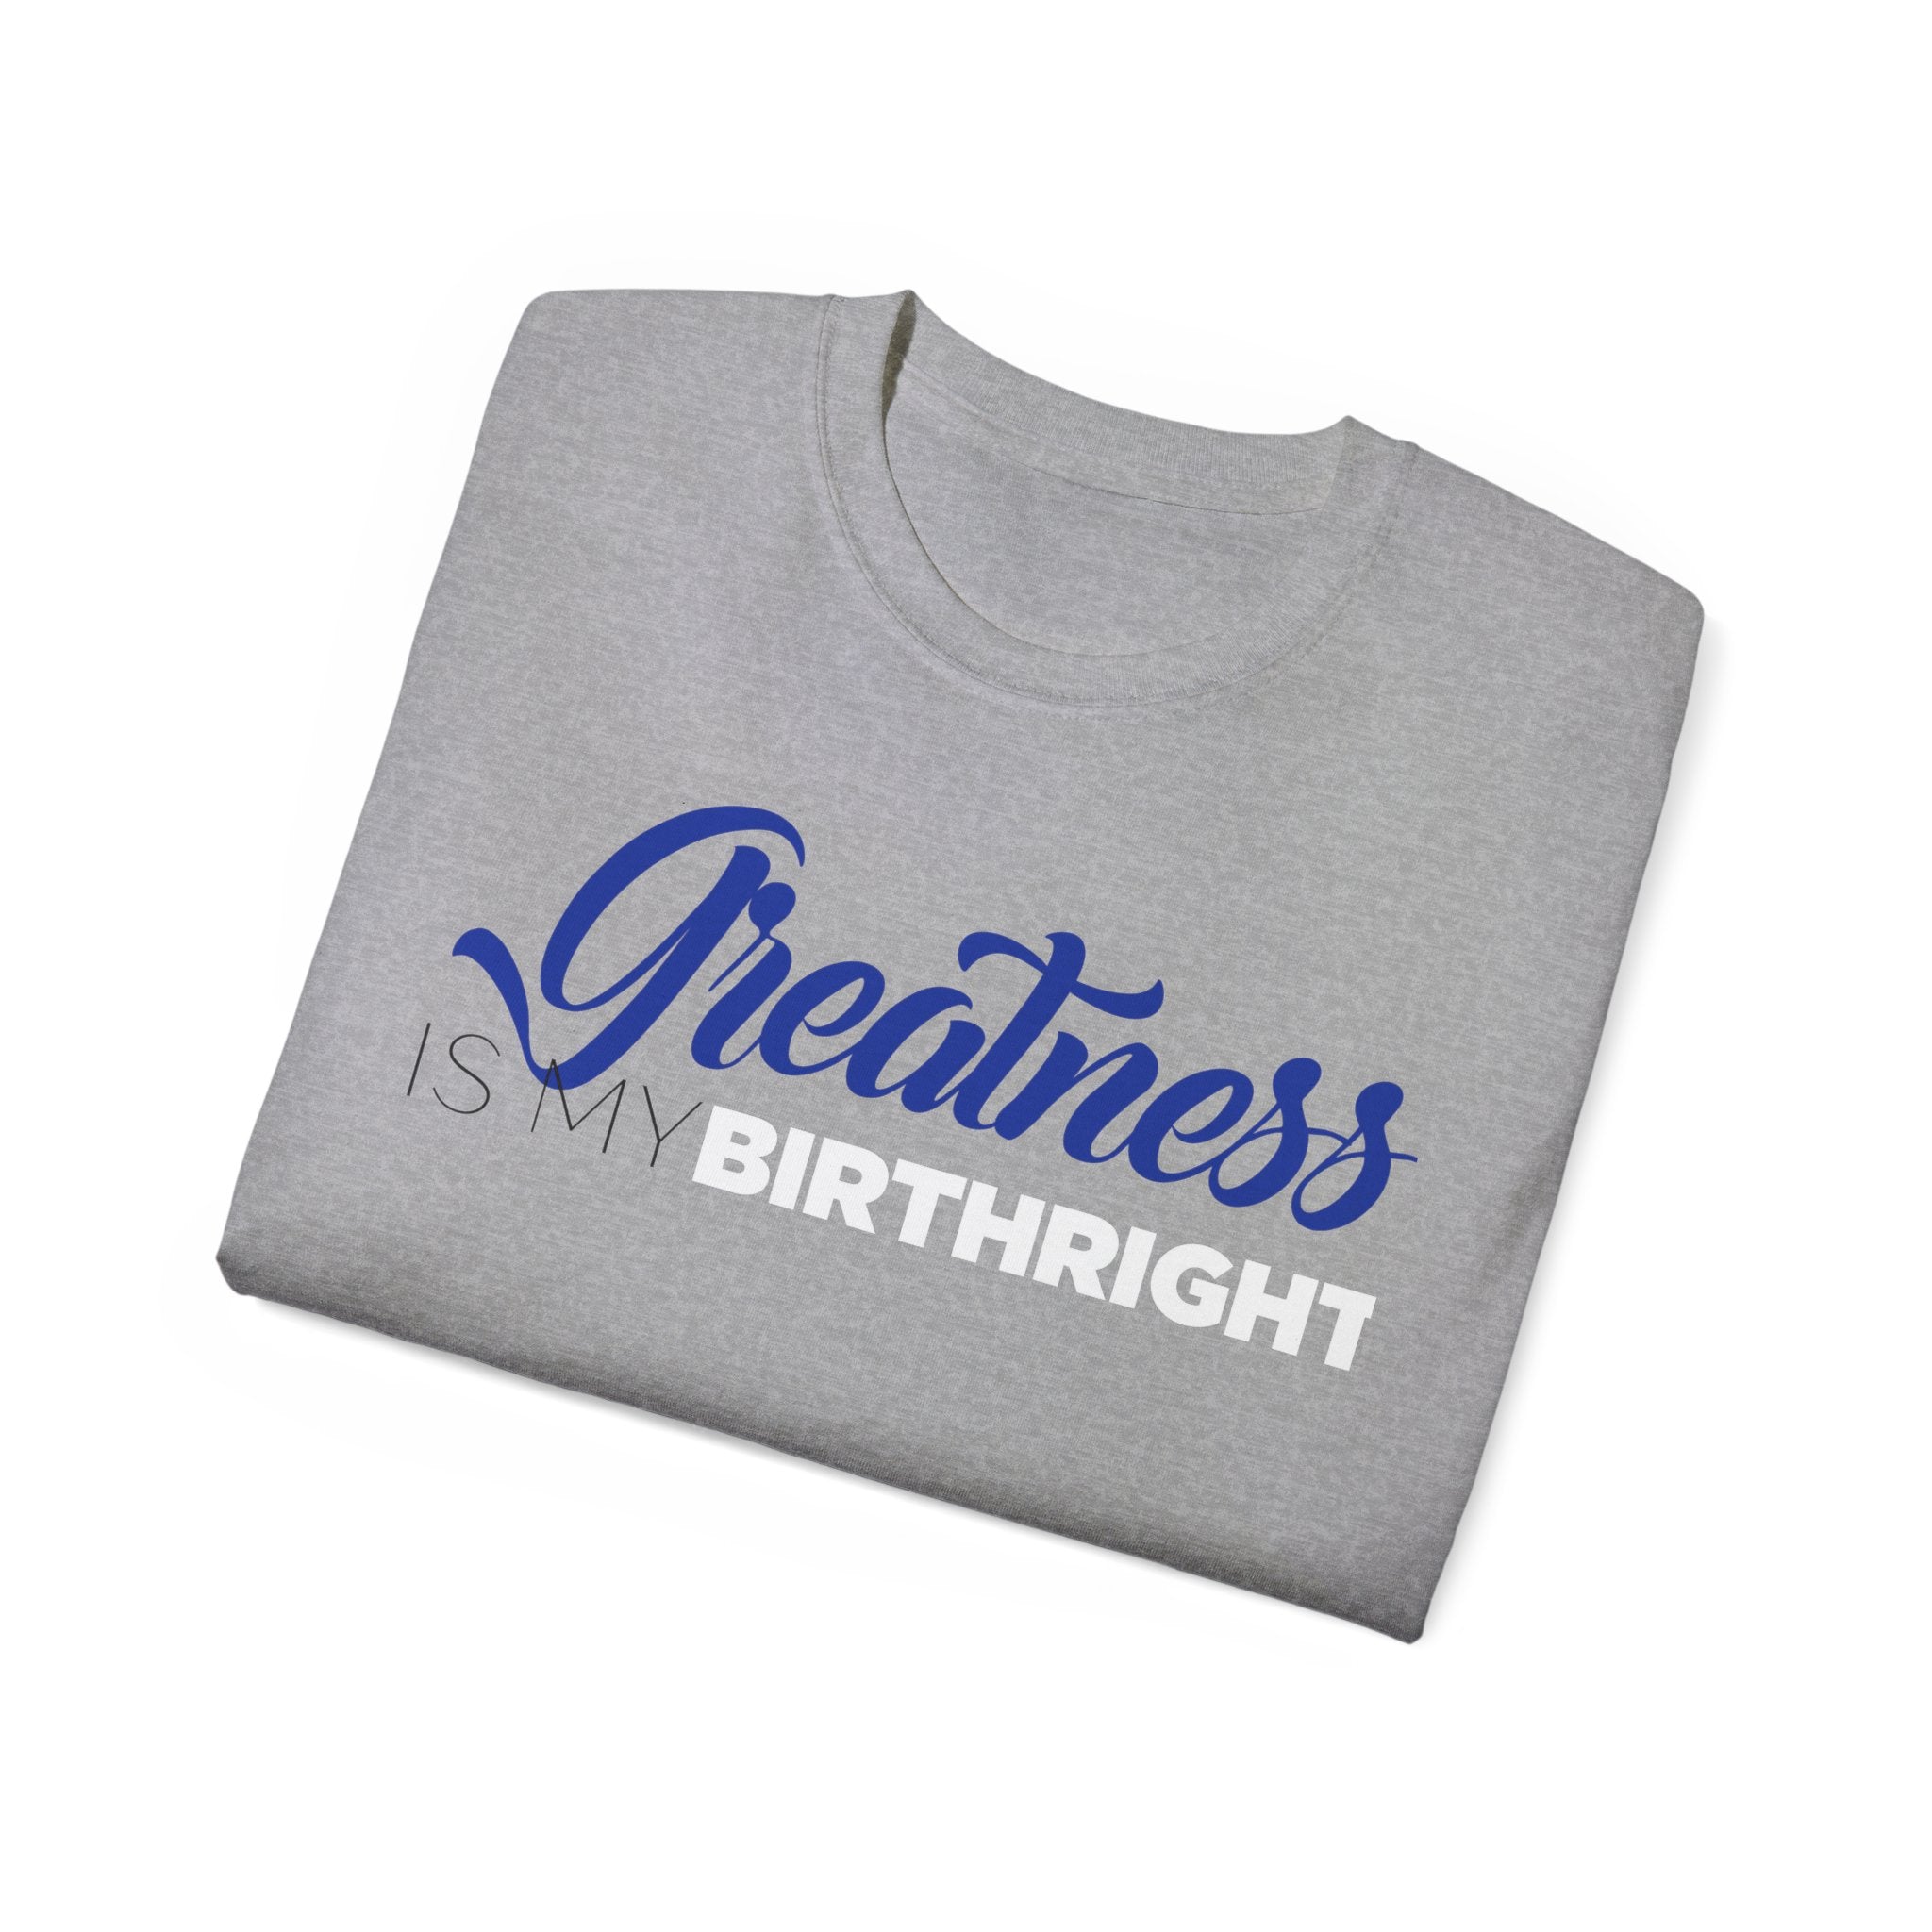 Greatness Shirt